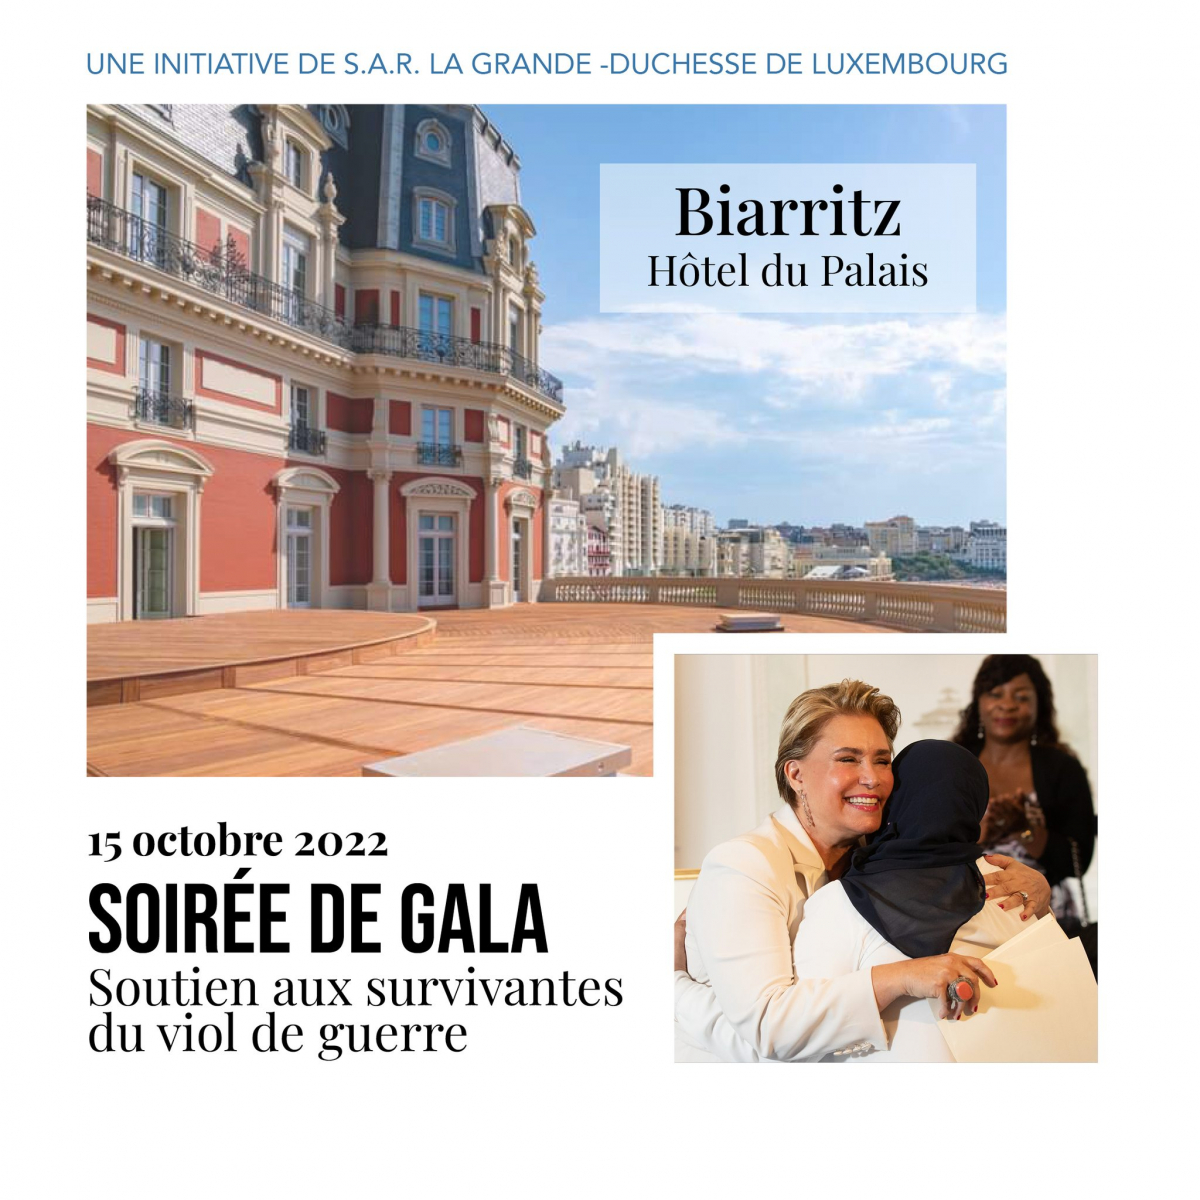 Biarritz : l’œuvre caritative de la Grande-Duchesse de Luxembourg